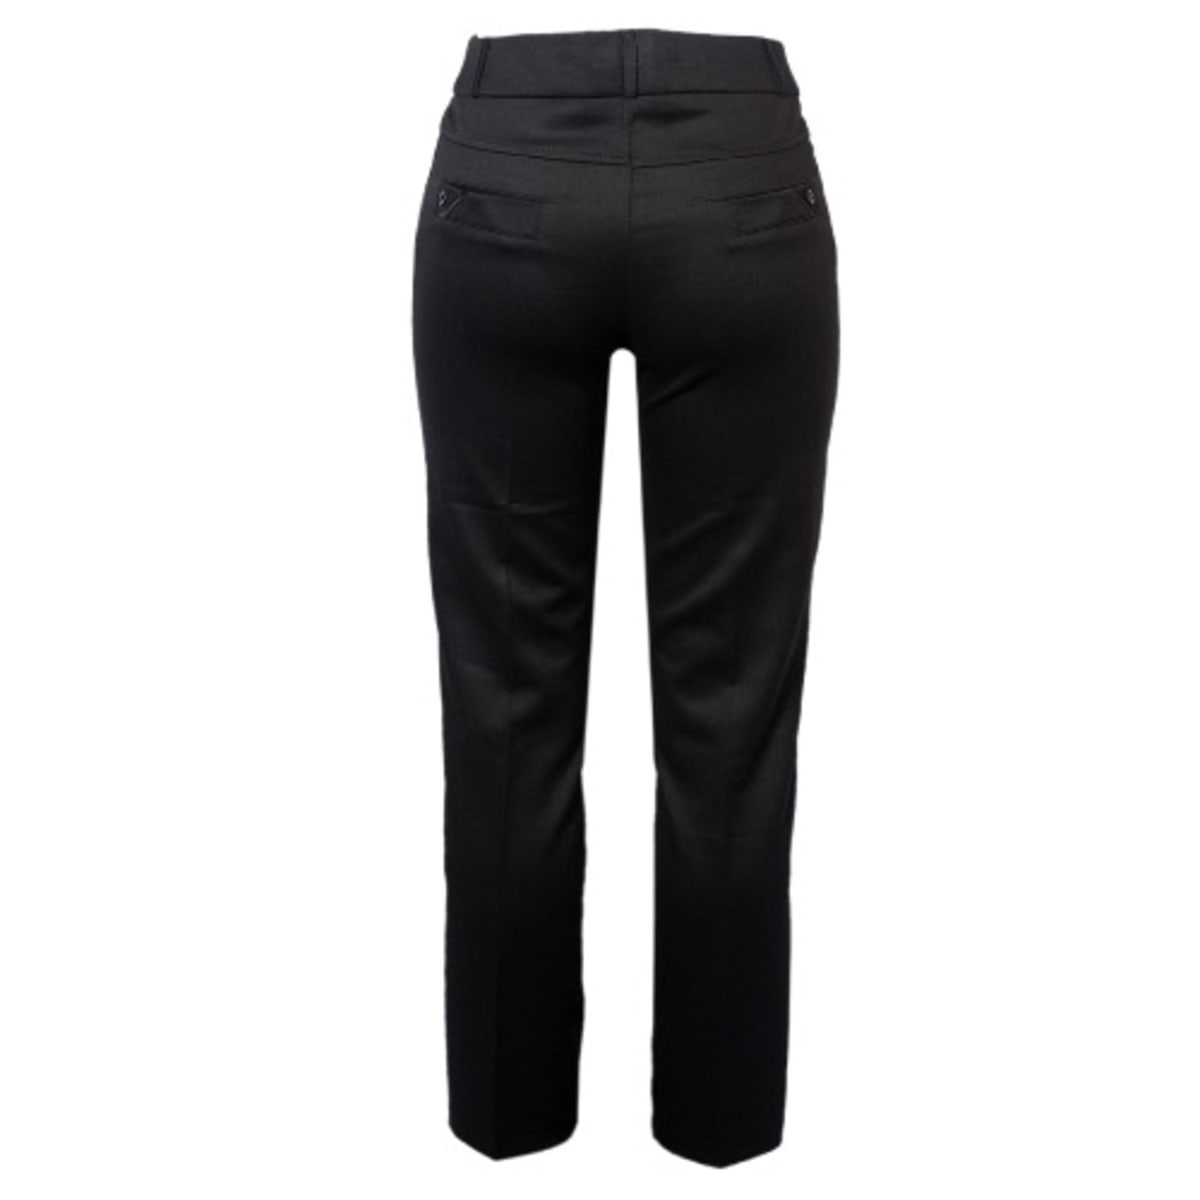 Black Linen Pants Lounge Pants Linen Pants Pajama Trousers - Etsy